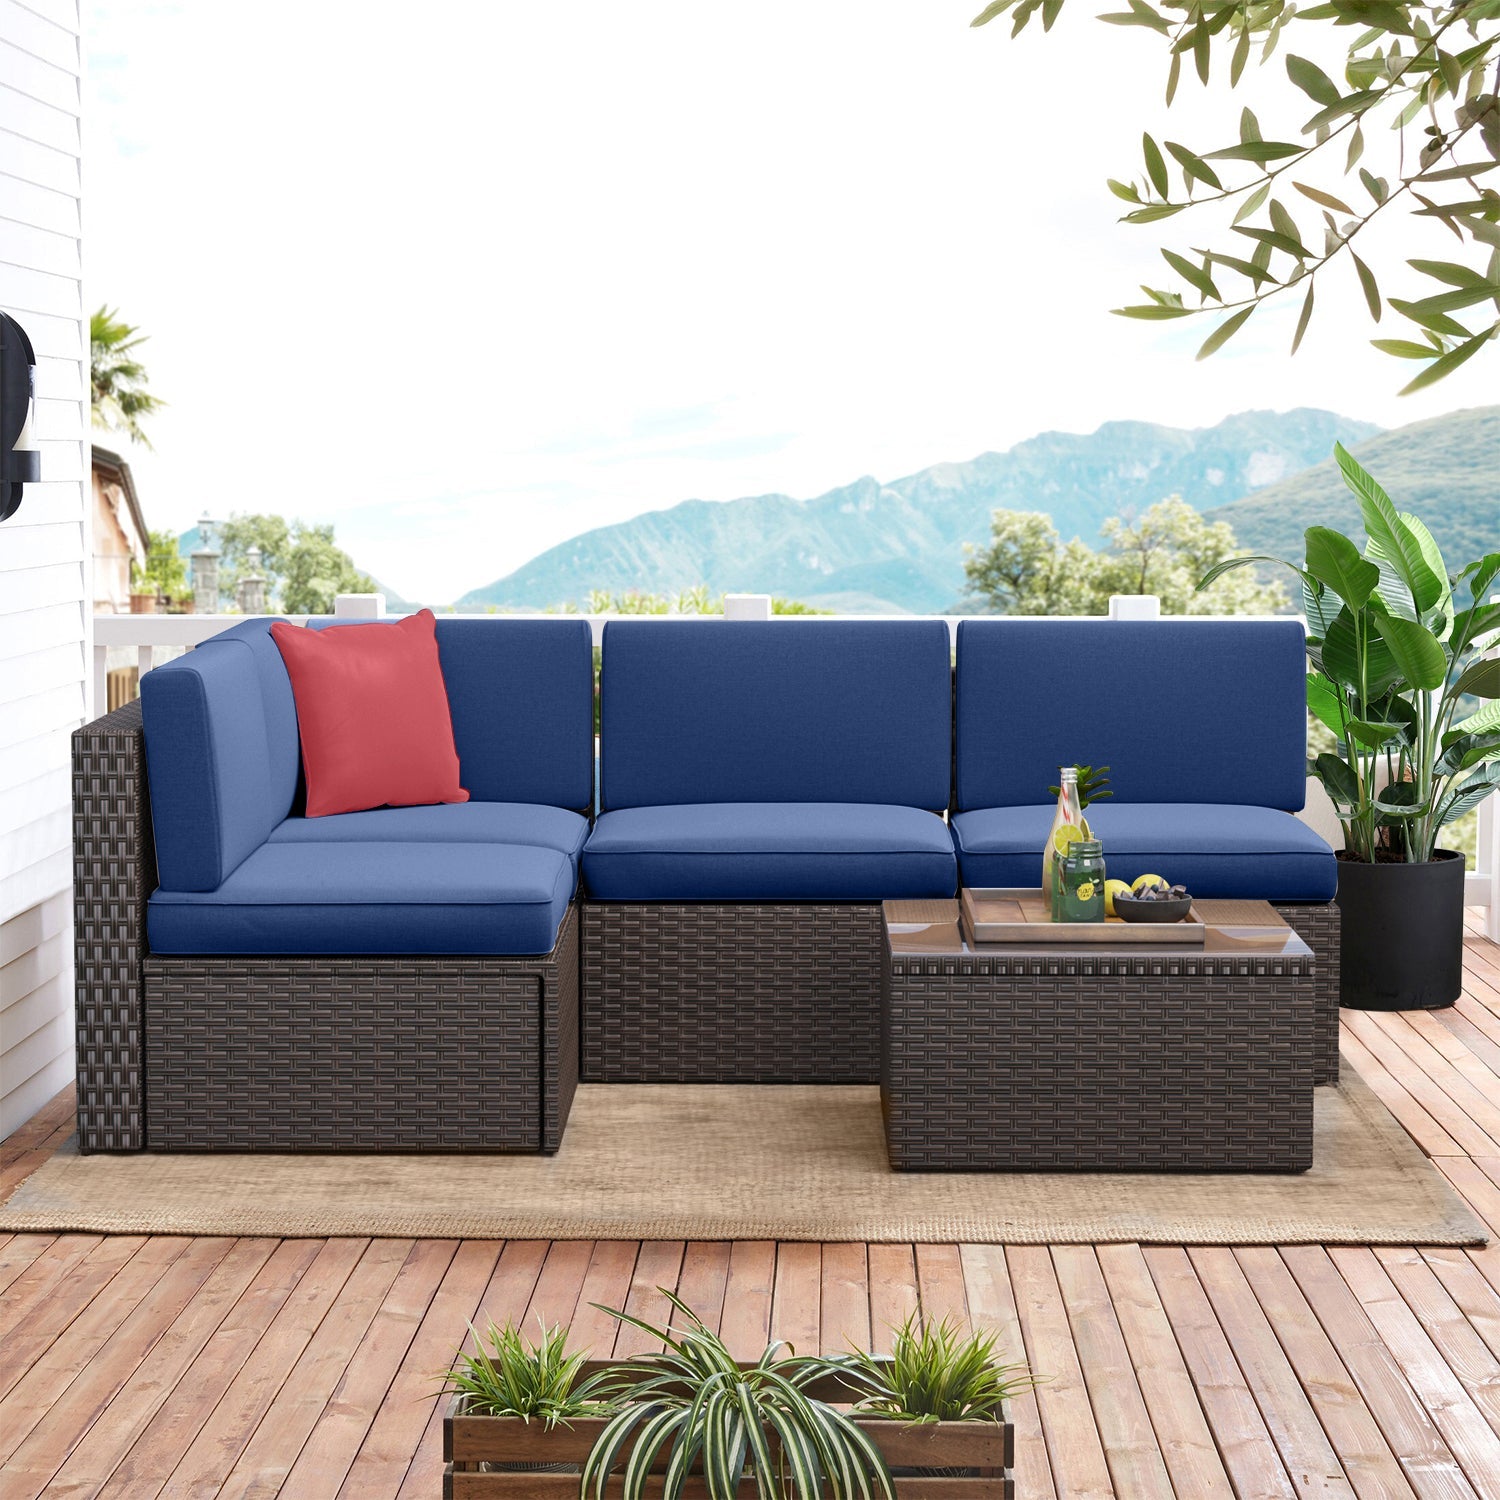 5-Piece Rattan Patio Conversation Set, Outdoor Patio Furniture Sets, Patio Furniture Sets with Coffe Table, Blue Cushions, for Garden, Backyard, Poolside